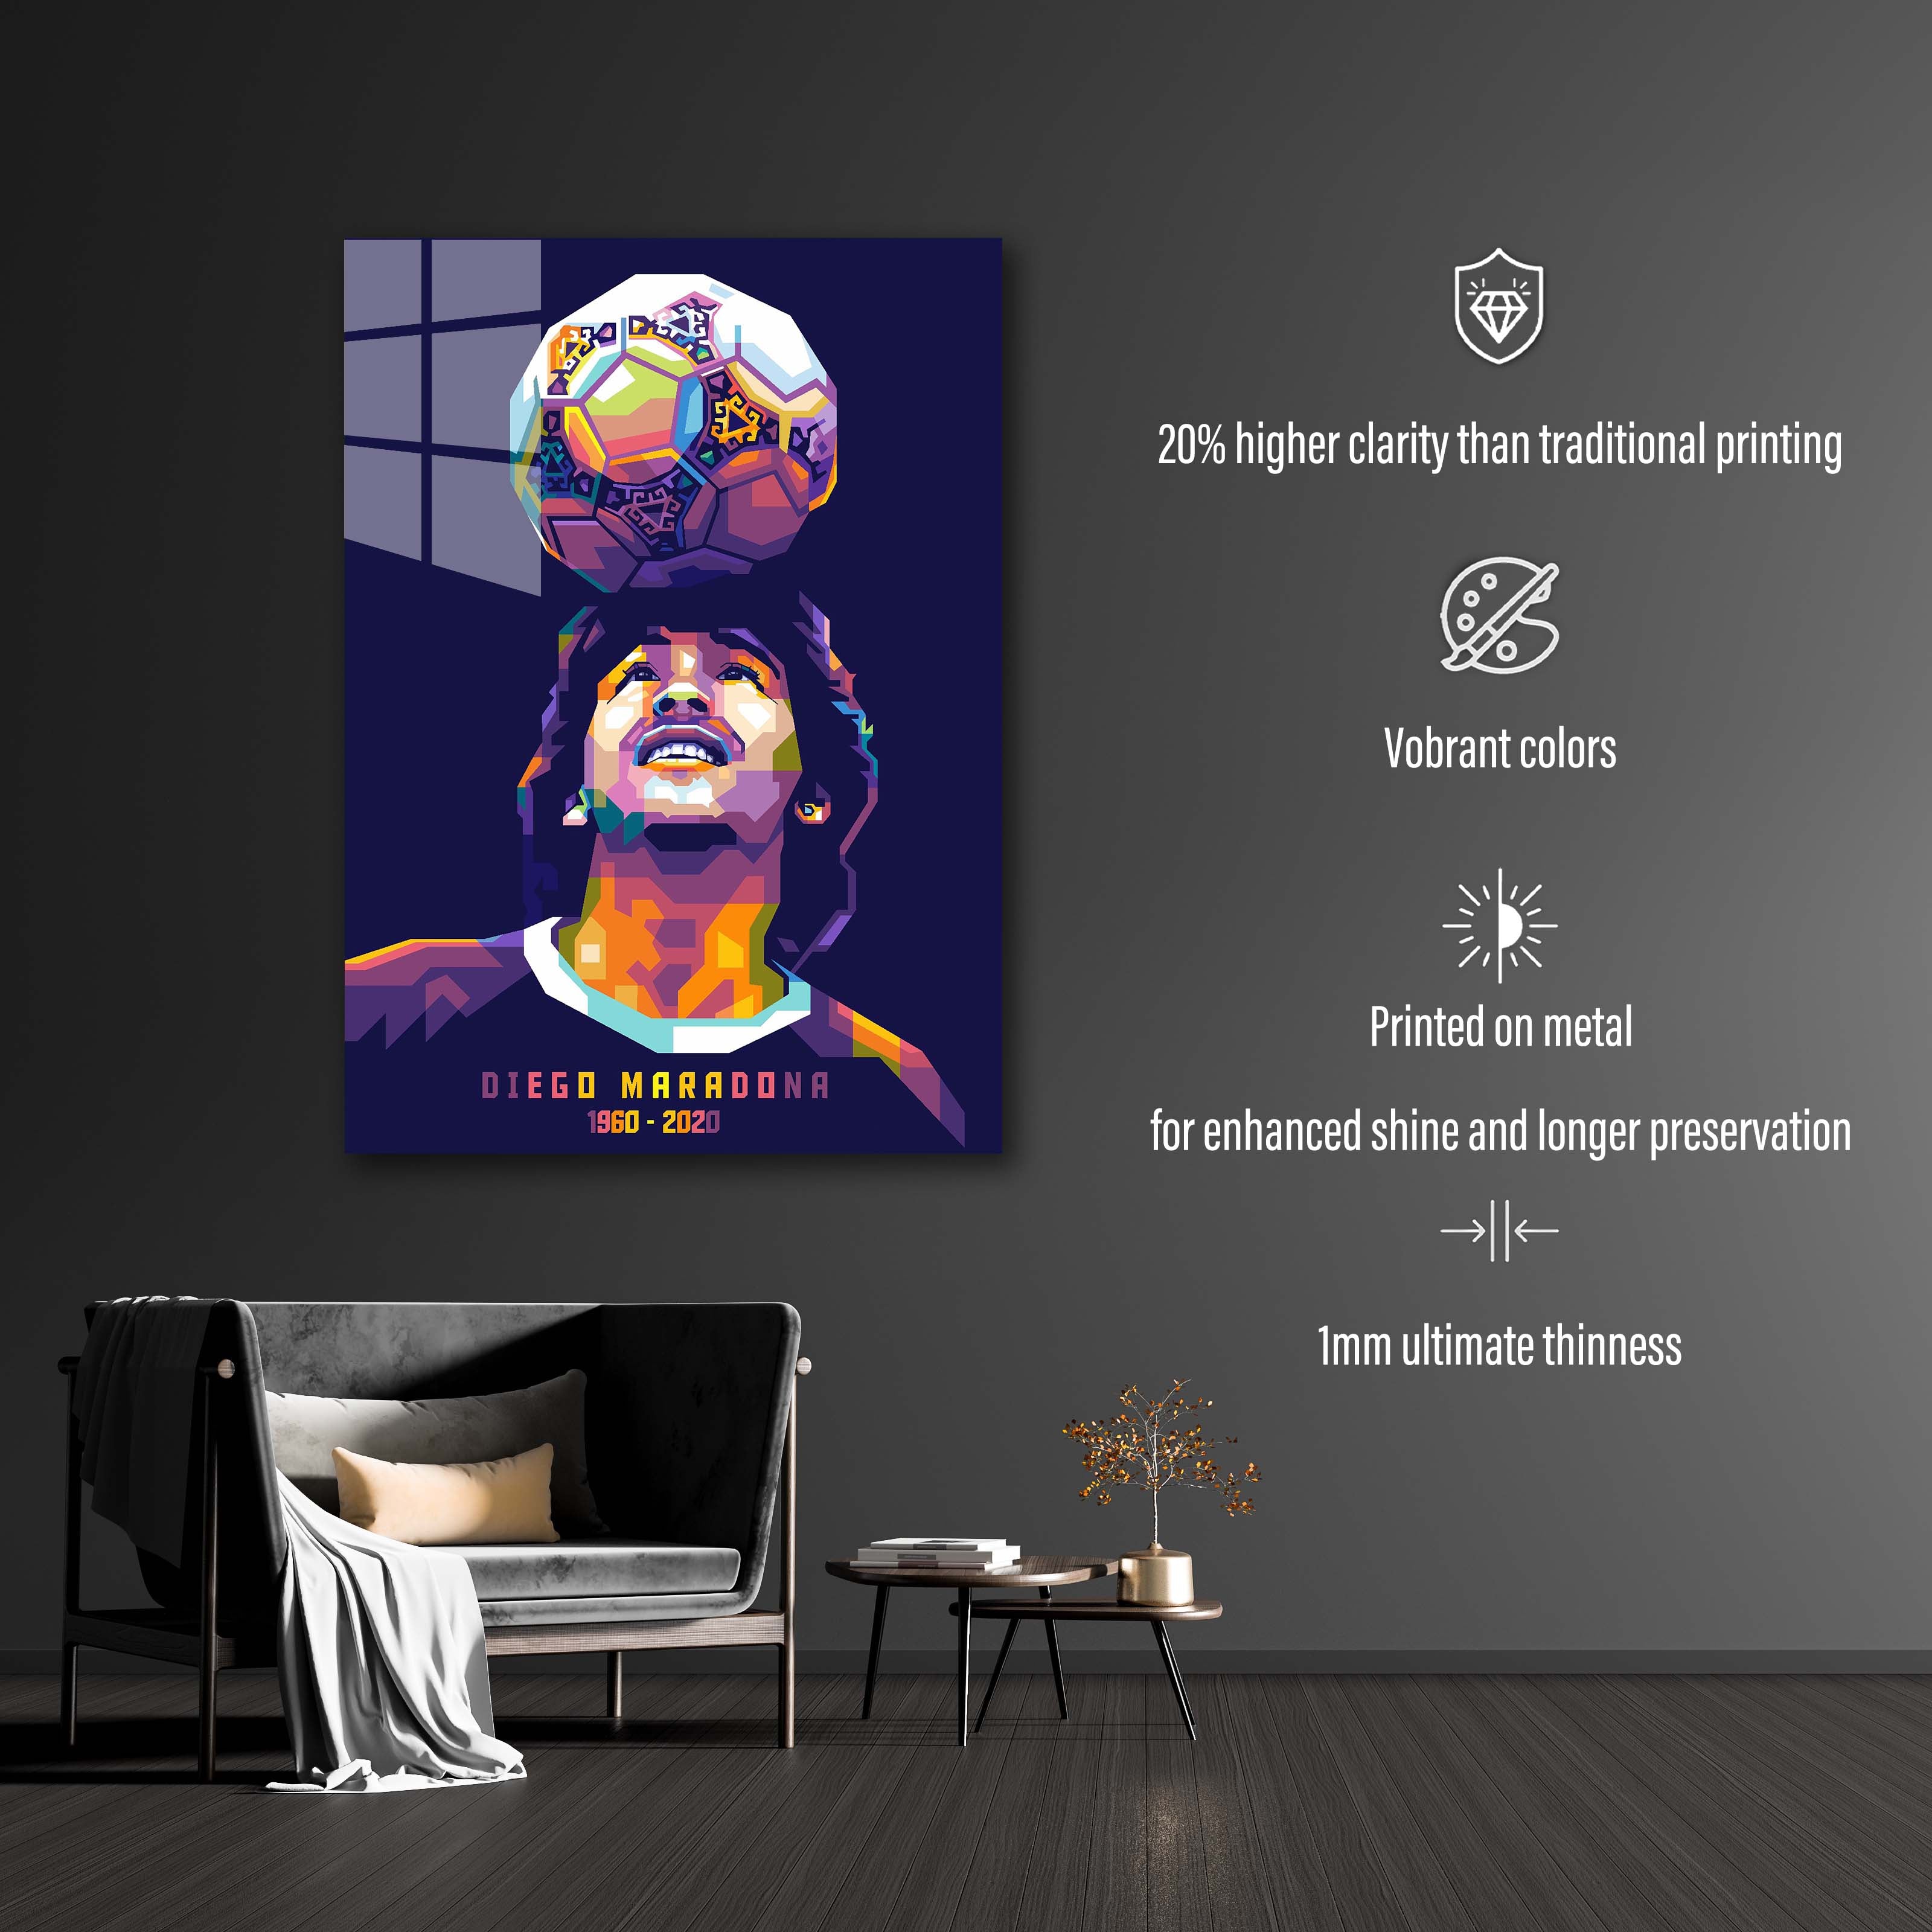 Diego Maradona WPAP-designed by @Agil Topann